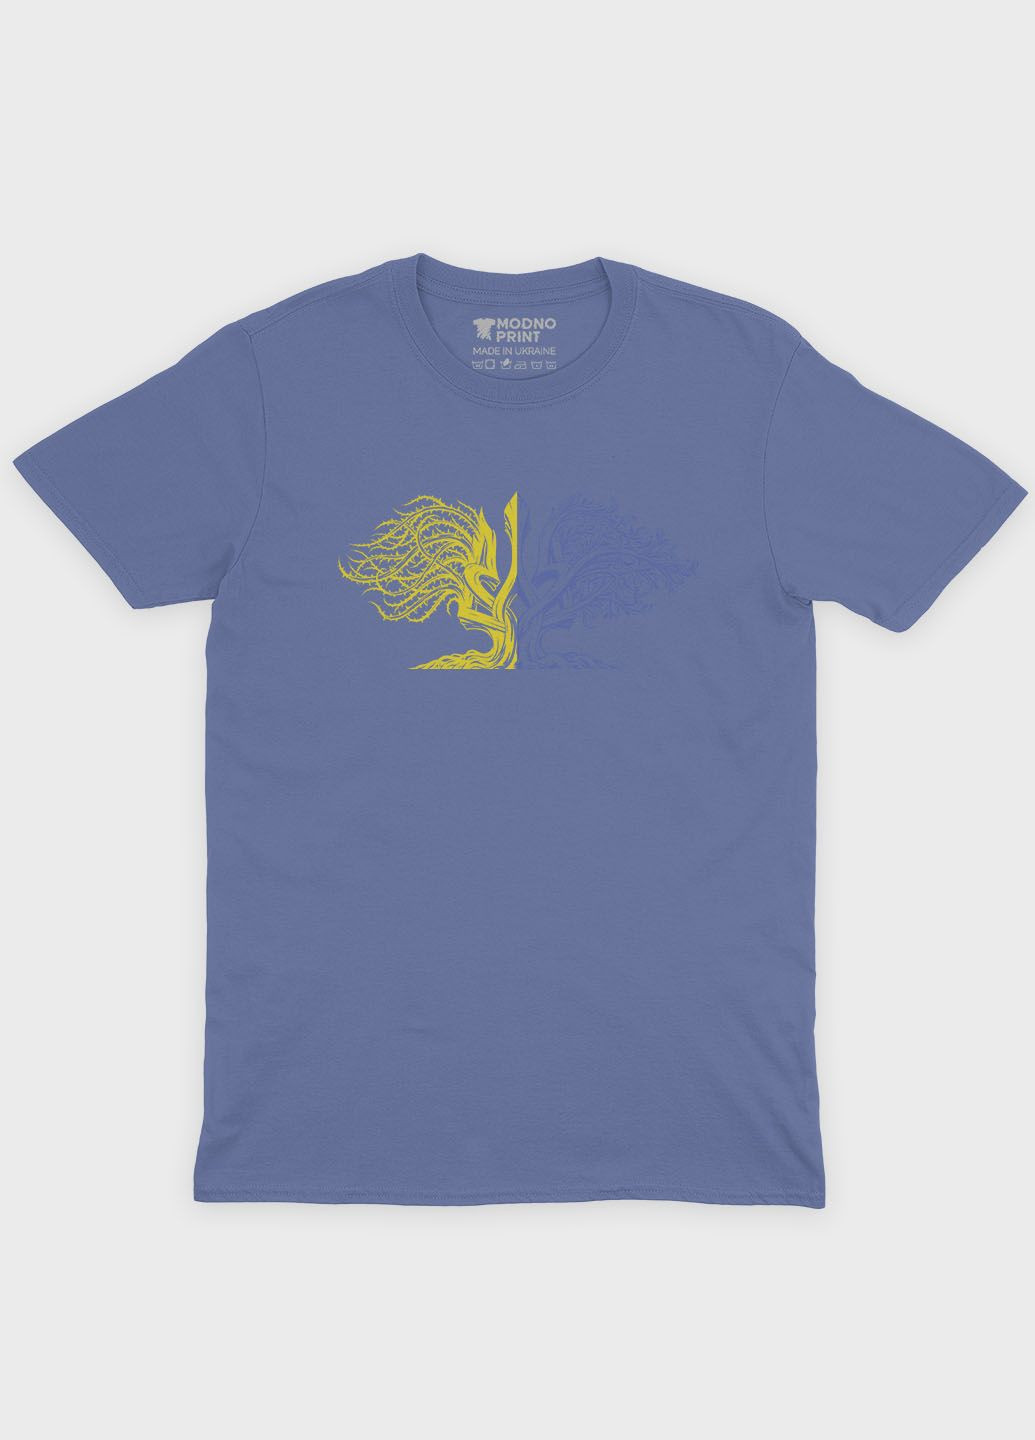 Темно-голубая футболка с патриотическим принтом гербтризуб (ts001-1-dmb-005-1-026) Modno